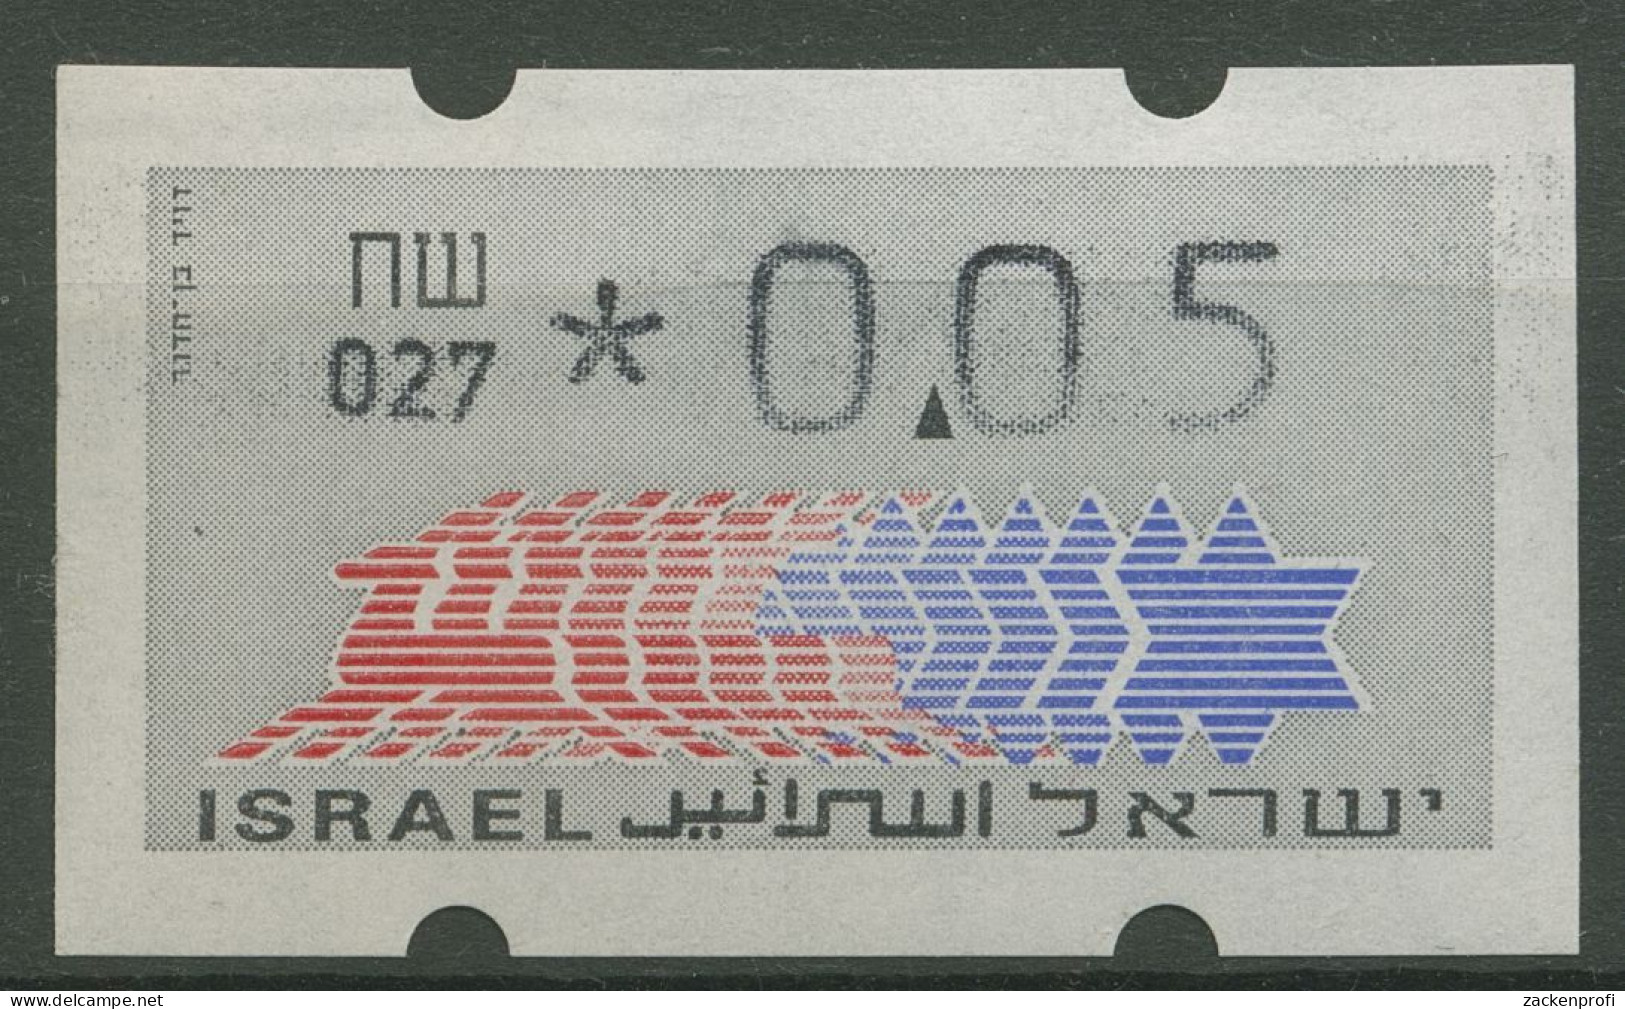 Israel ATM 1990 Hirsch Automat 027 Einzelwert ATM 3.3.27 Postfrisch - Frankeervignetten (Frama)